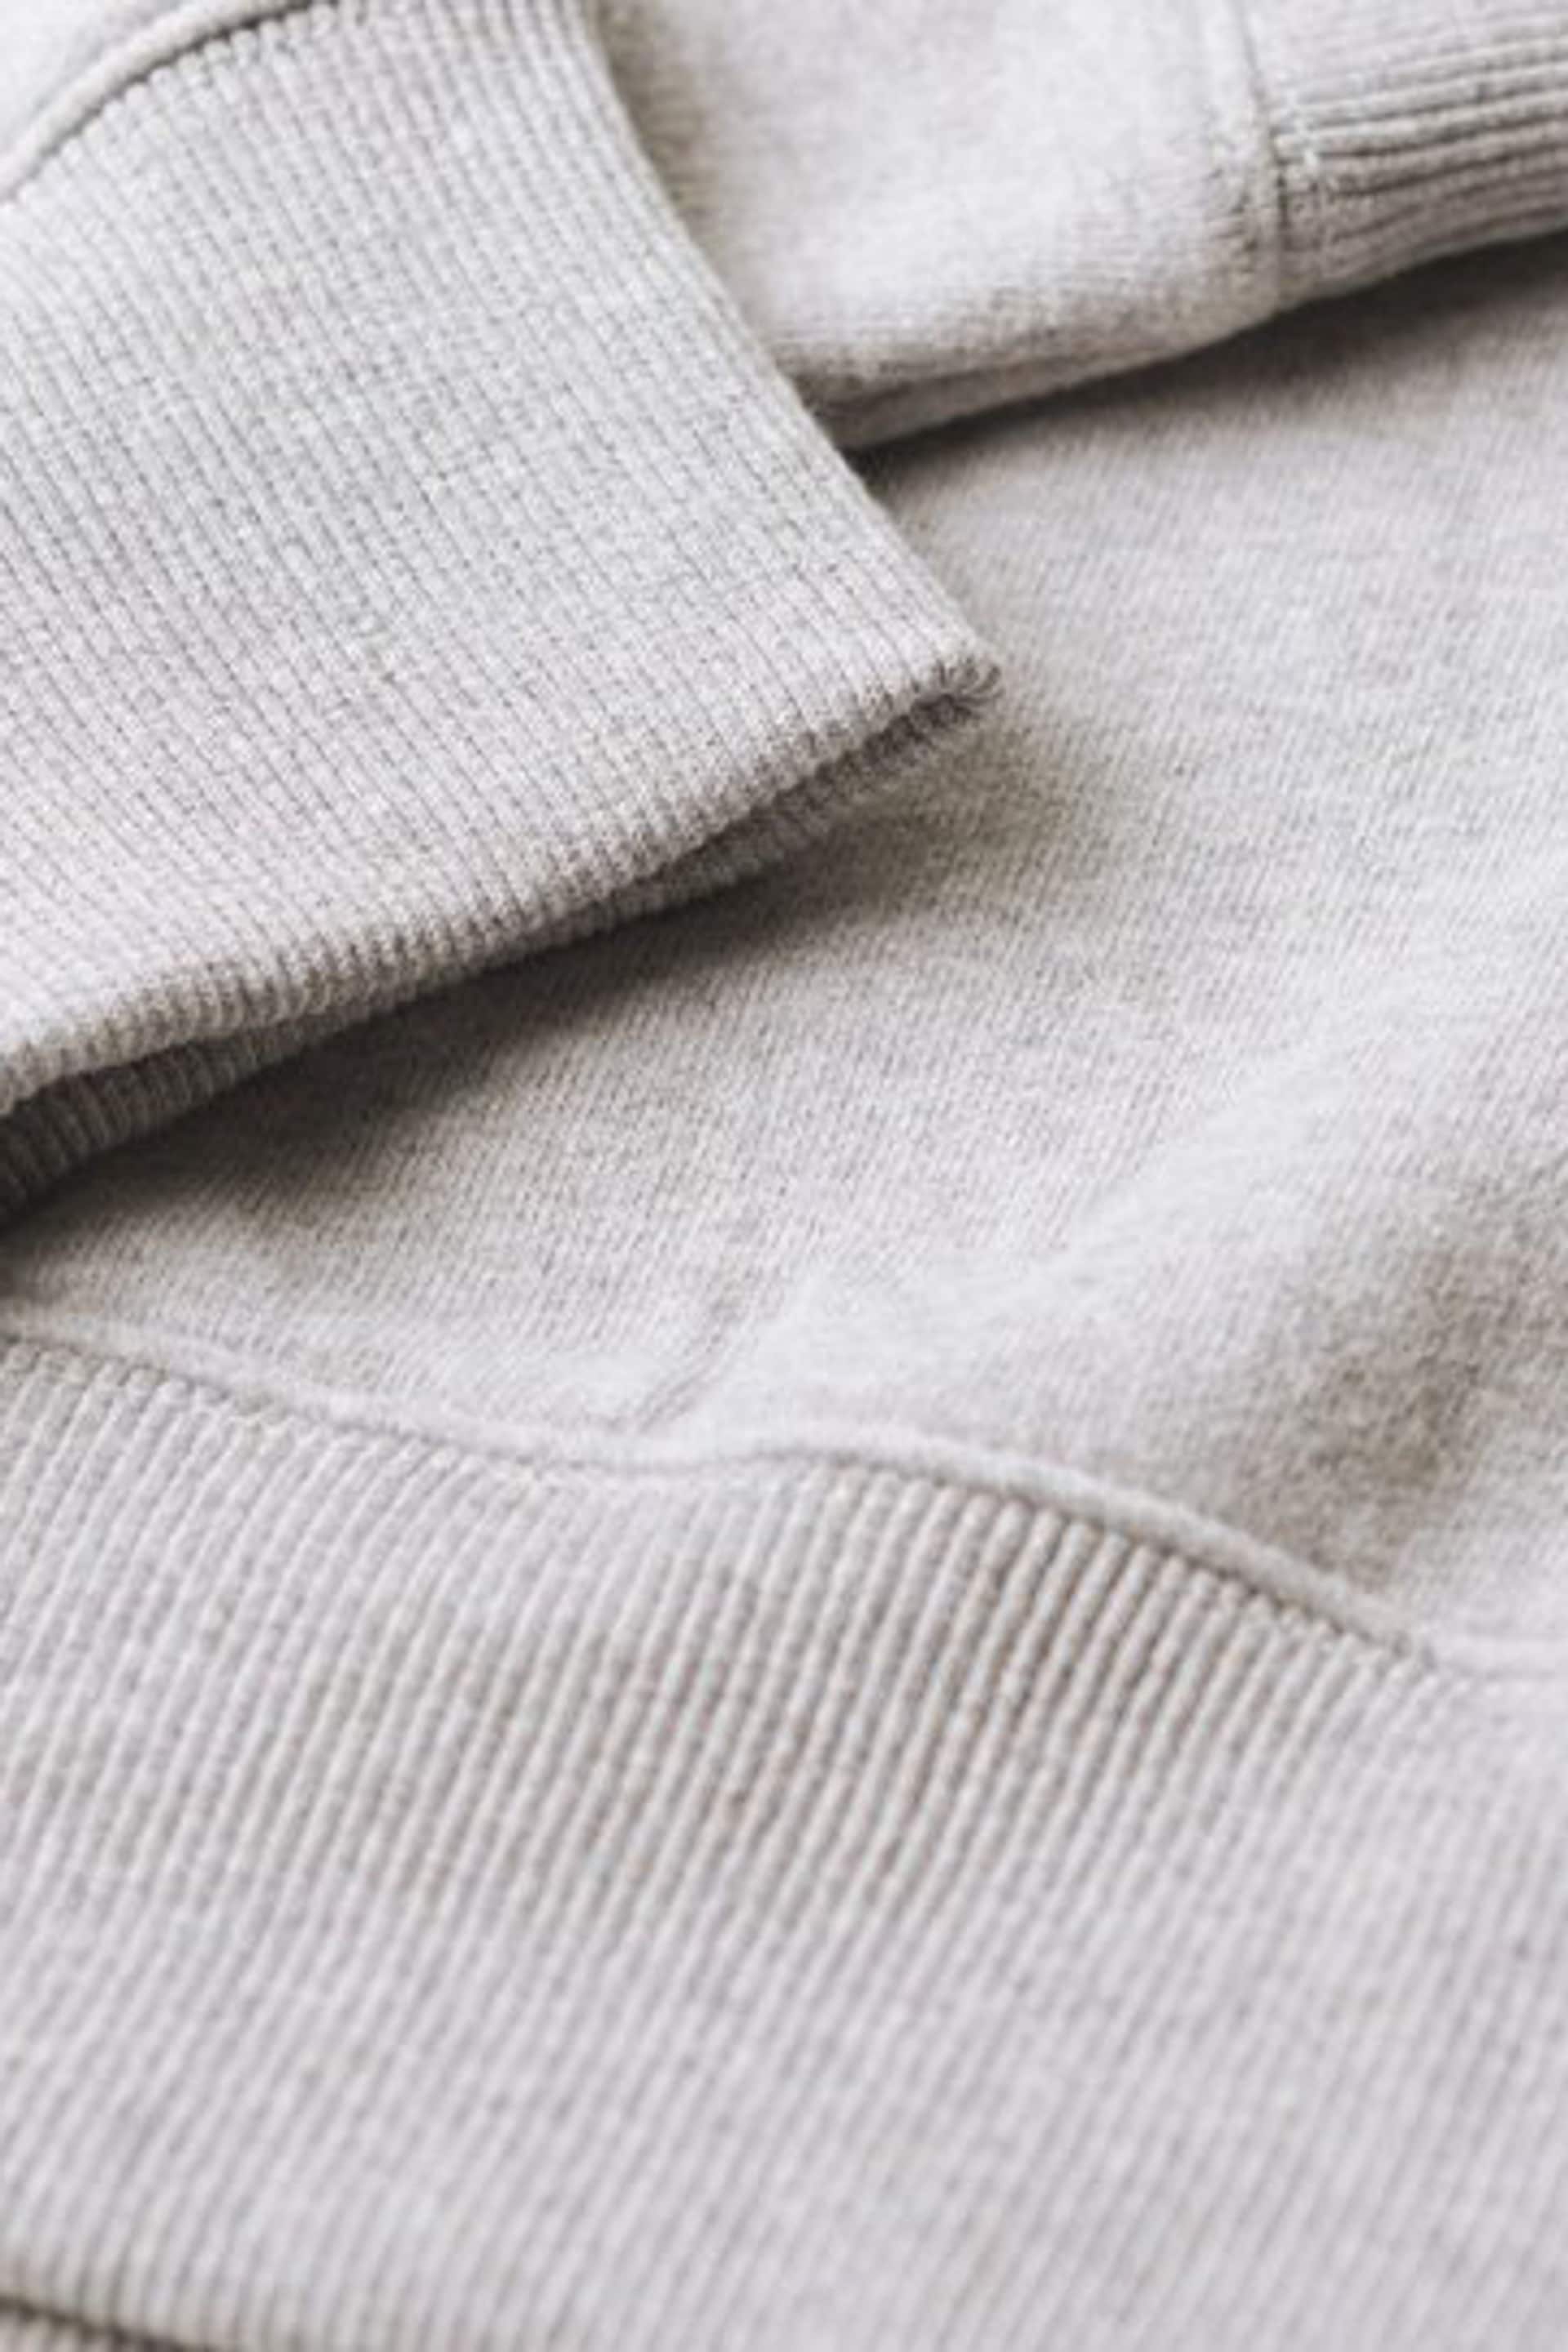 Superdry Grey Vintage Washed Sweatshirt - Image 5 of 6